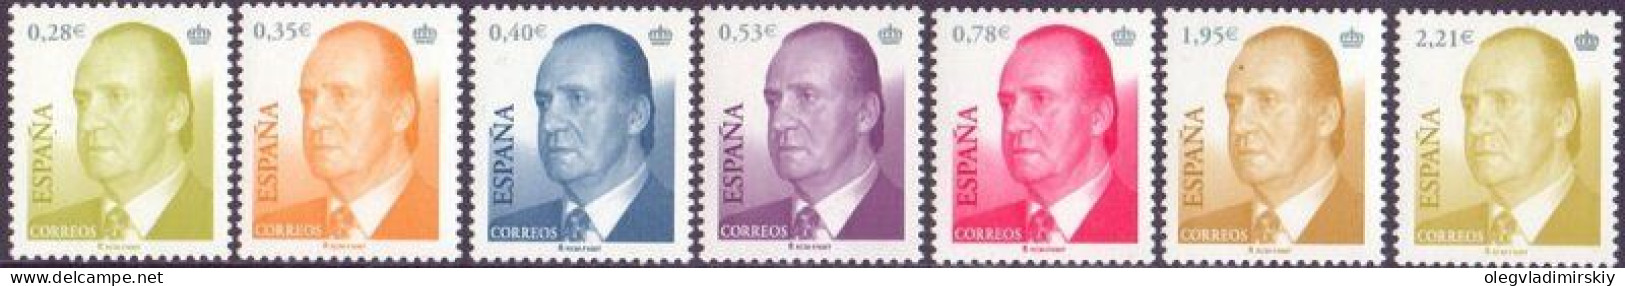 Spain Espagne Spanien 2005 King Juan Carlos I Definitives Set Of 7 Stamps MNH - Neufs